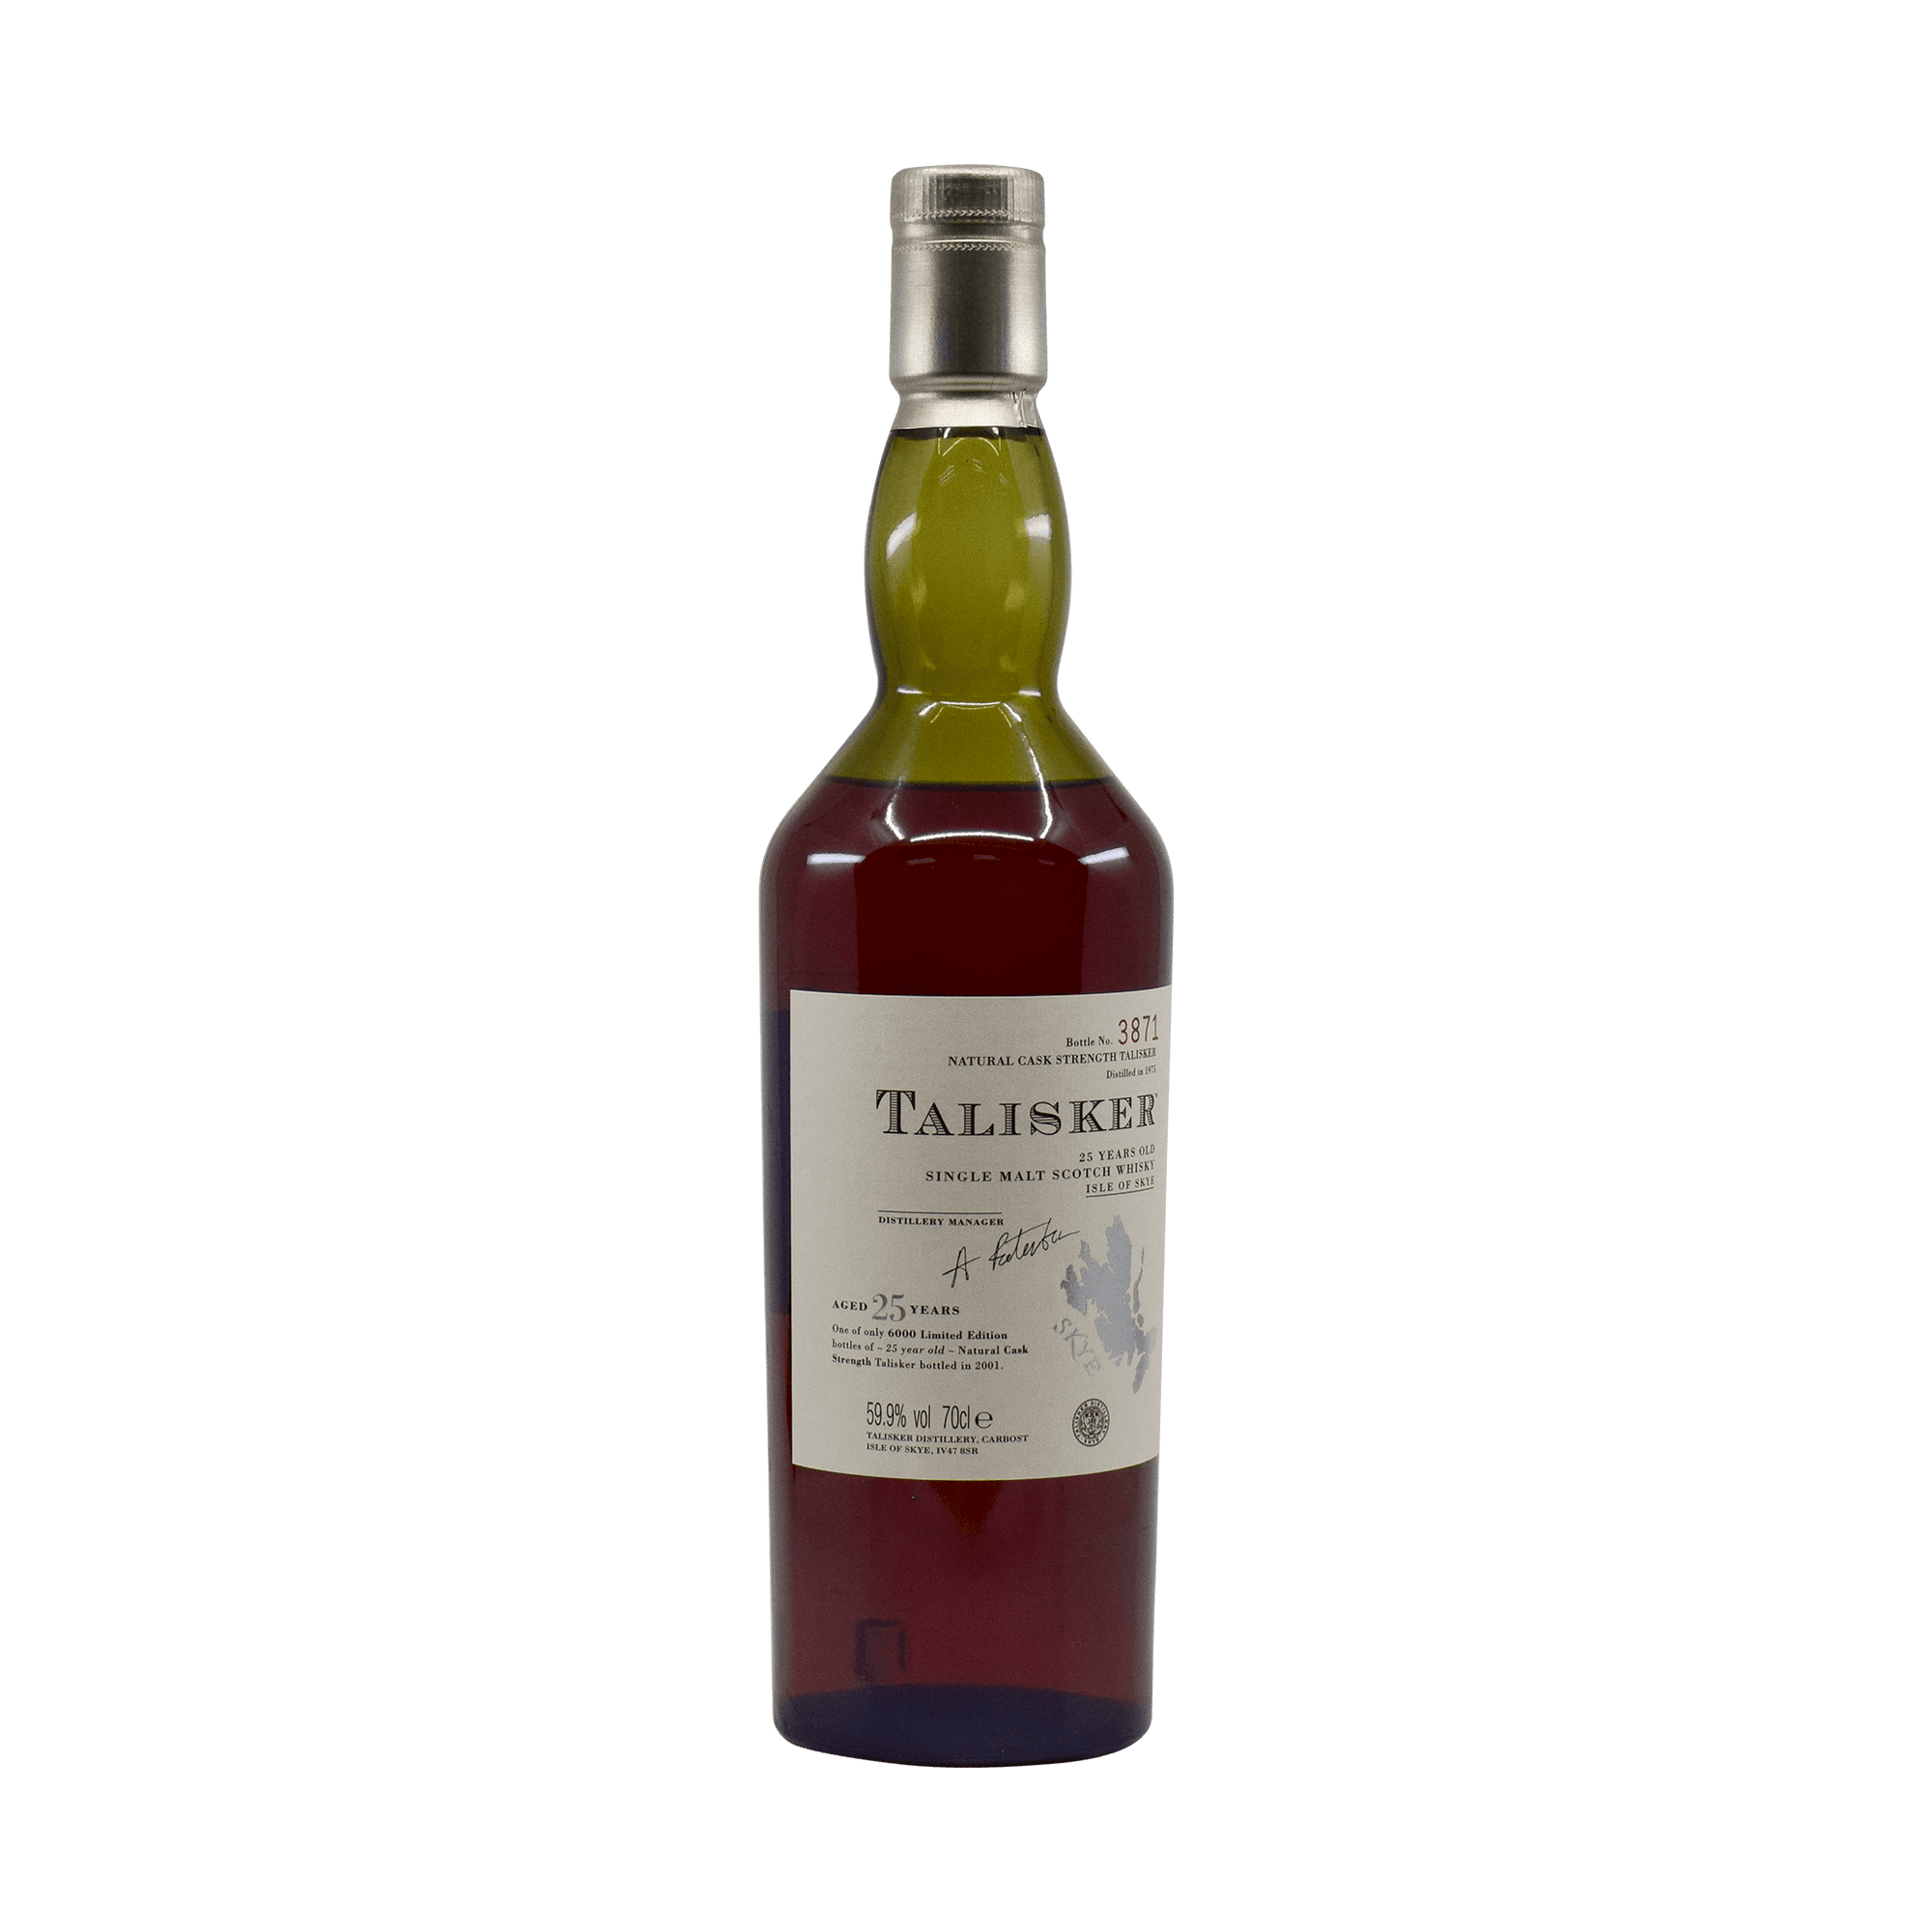 Talisker - Whisky Business